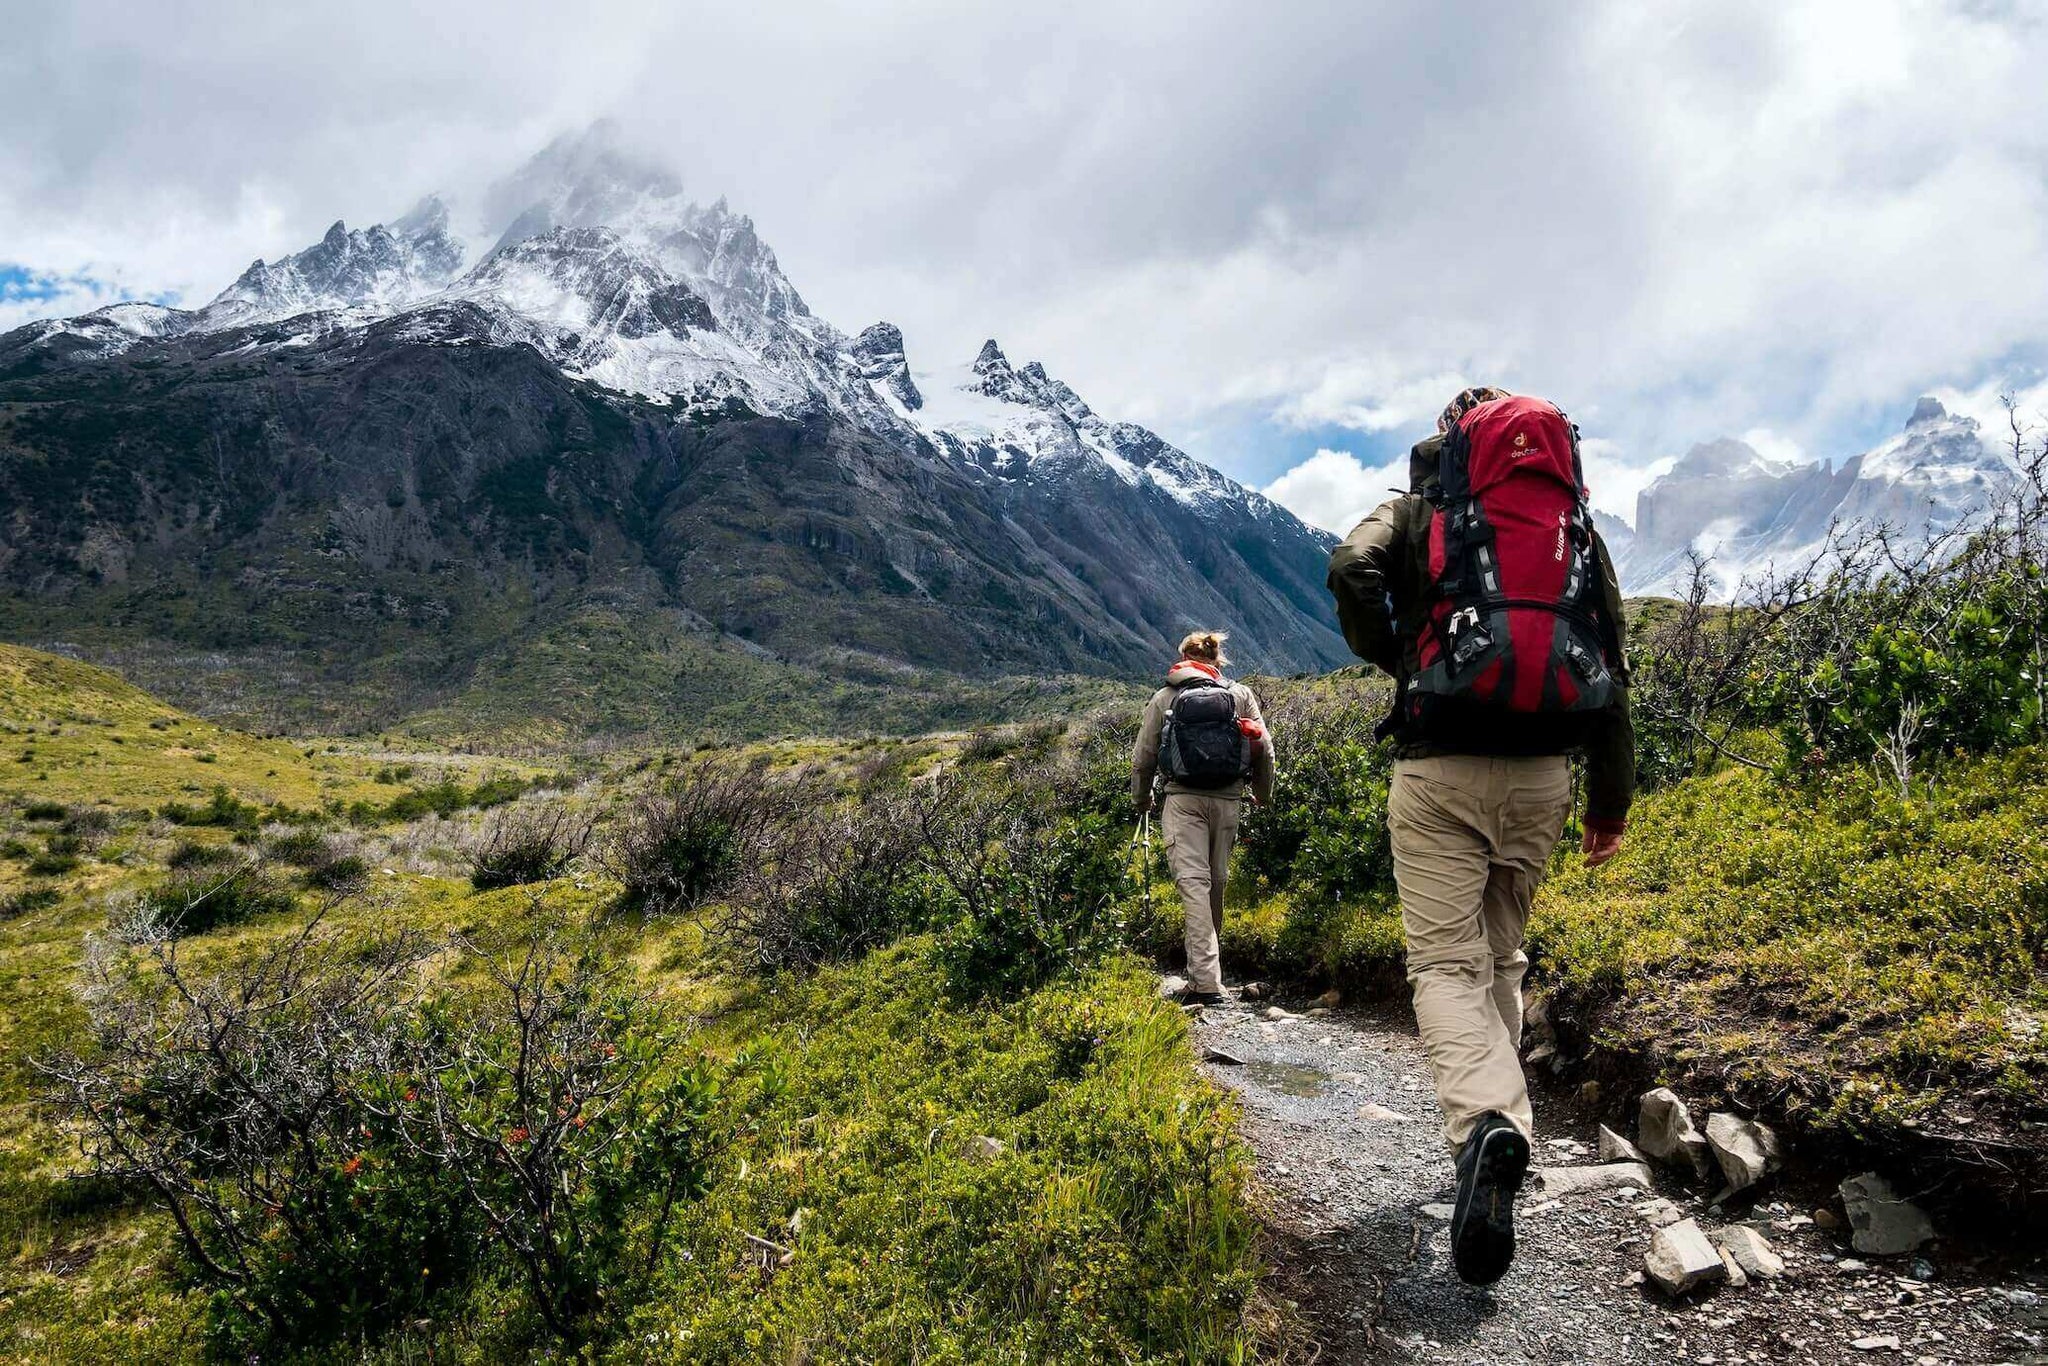 Toe socks benefits include helping two hikers trek across rough terrain